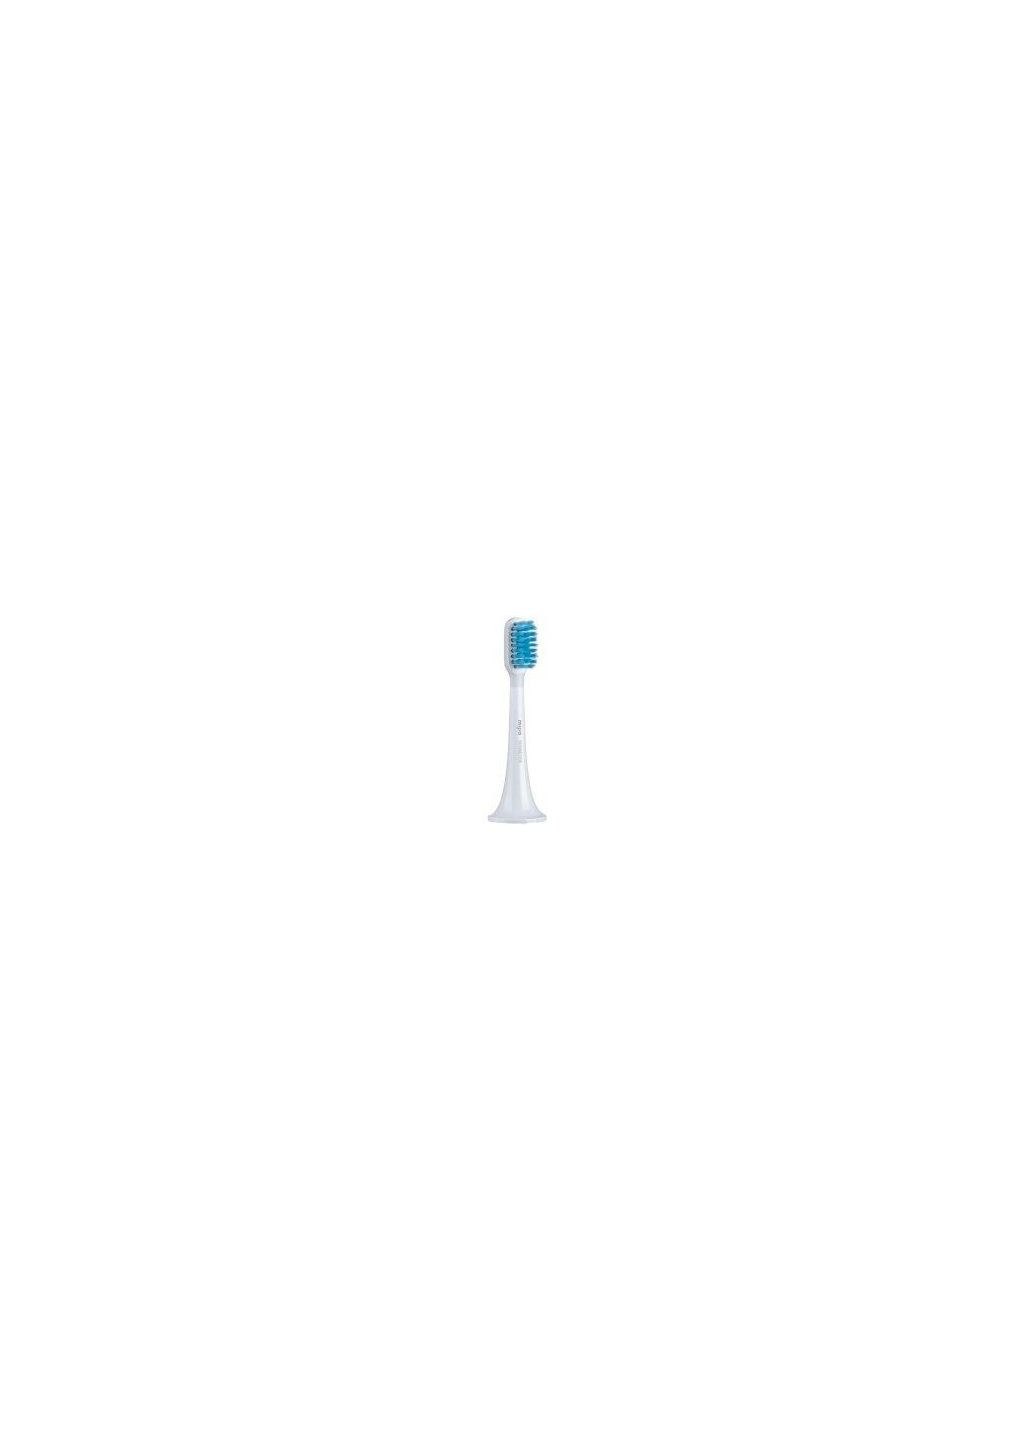 Насадки для зубной щетки Toothbrush Heads 3 in1 Kit (NUN4090GL, MBS301) сменные головки MiJia (280877983)